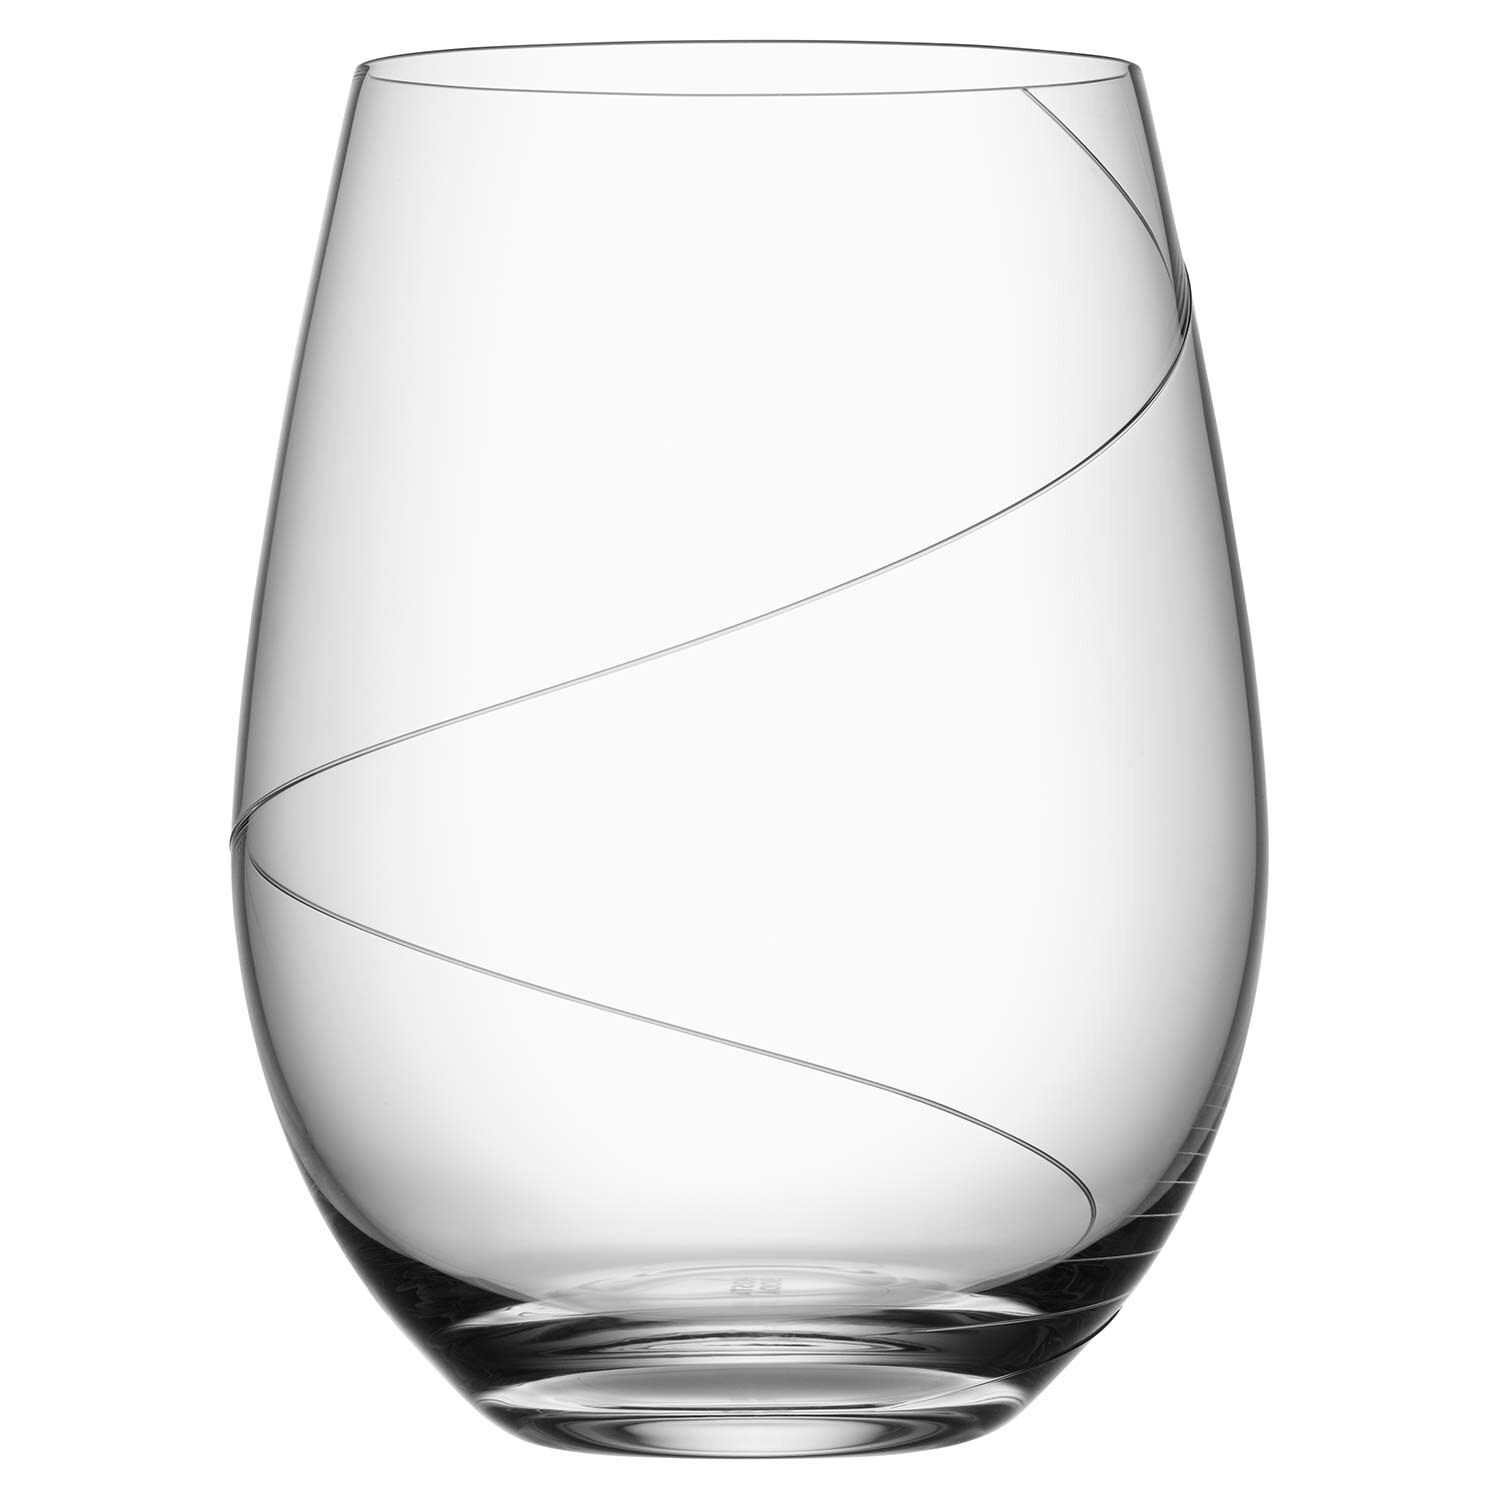 https://royaldesign.com/image/2/kosta-boda-line-gin-tonic-glass-0